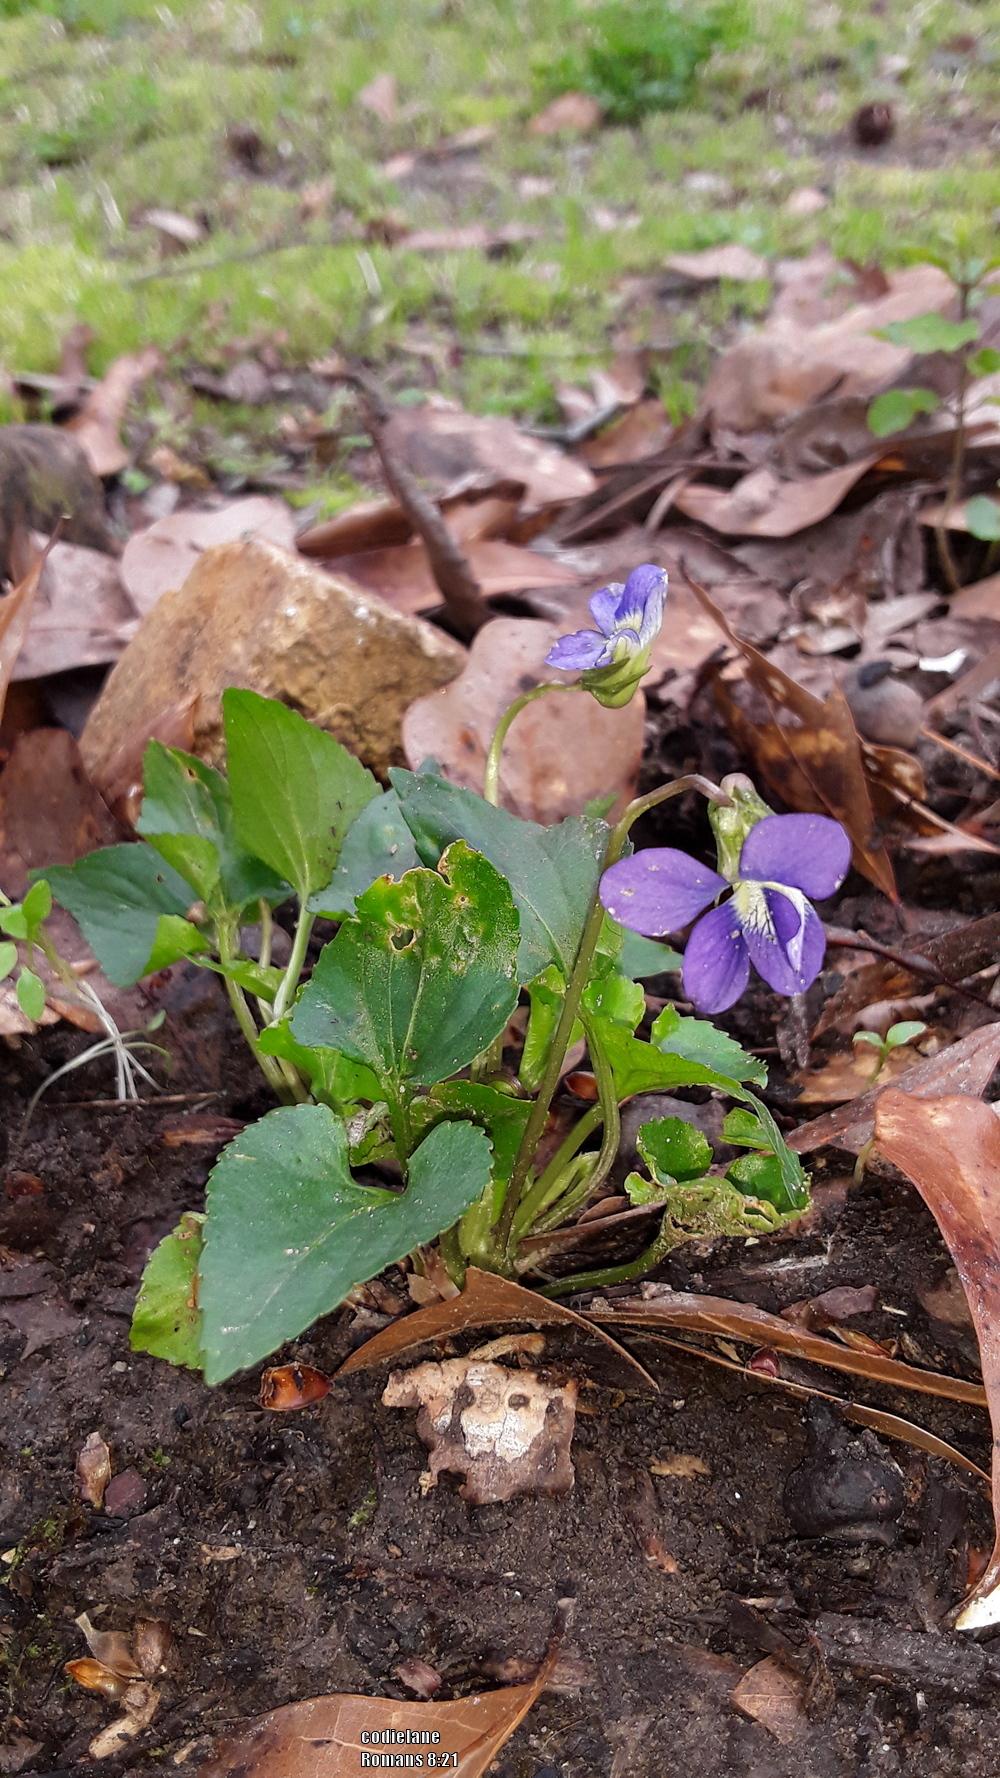 Photo of Common Blue Violet (Viola sororia) uploaded by codielane